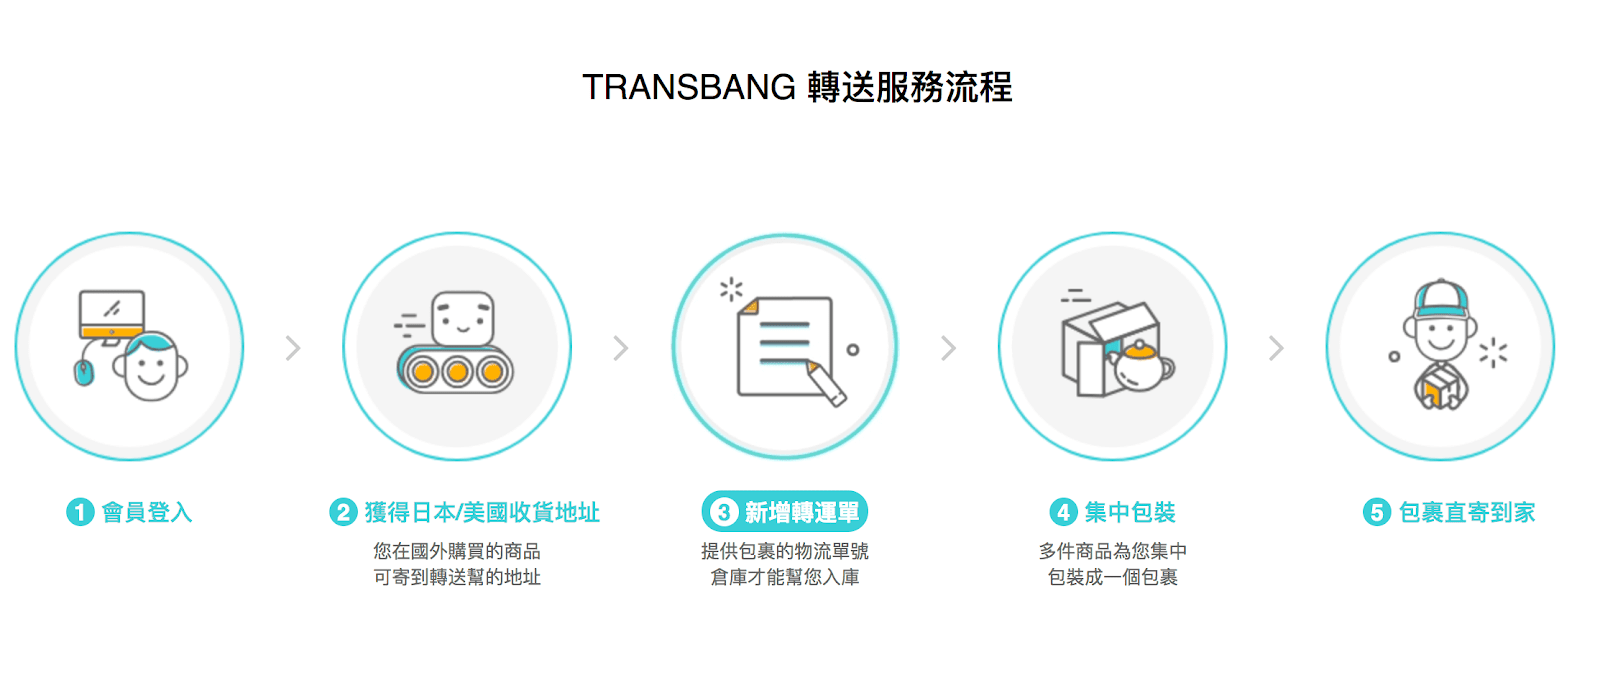 TRANSBANG 轉送服務流程